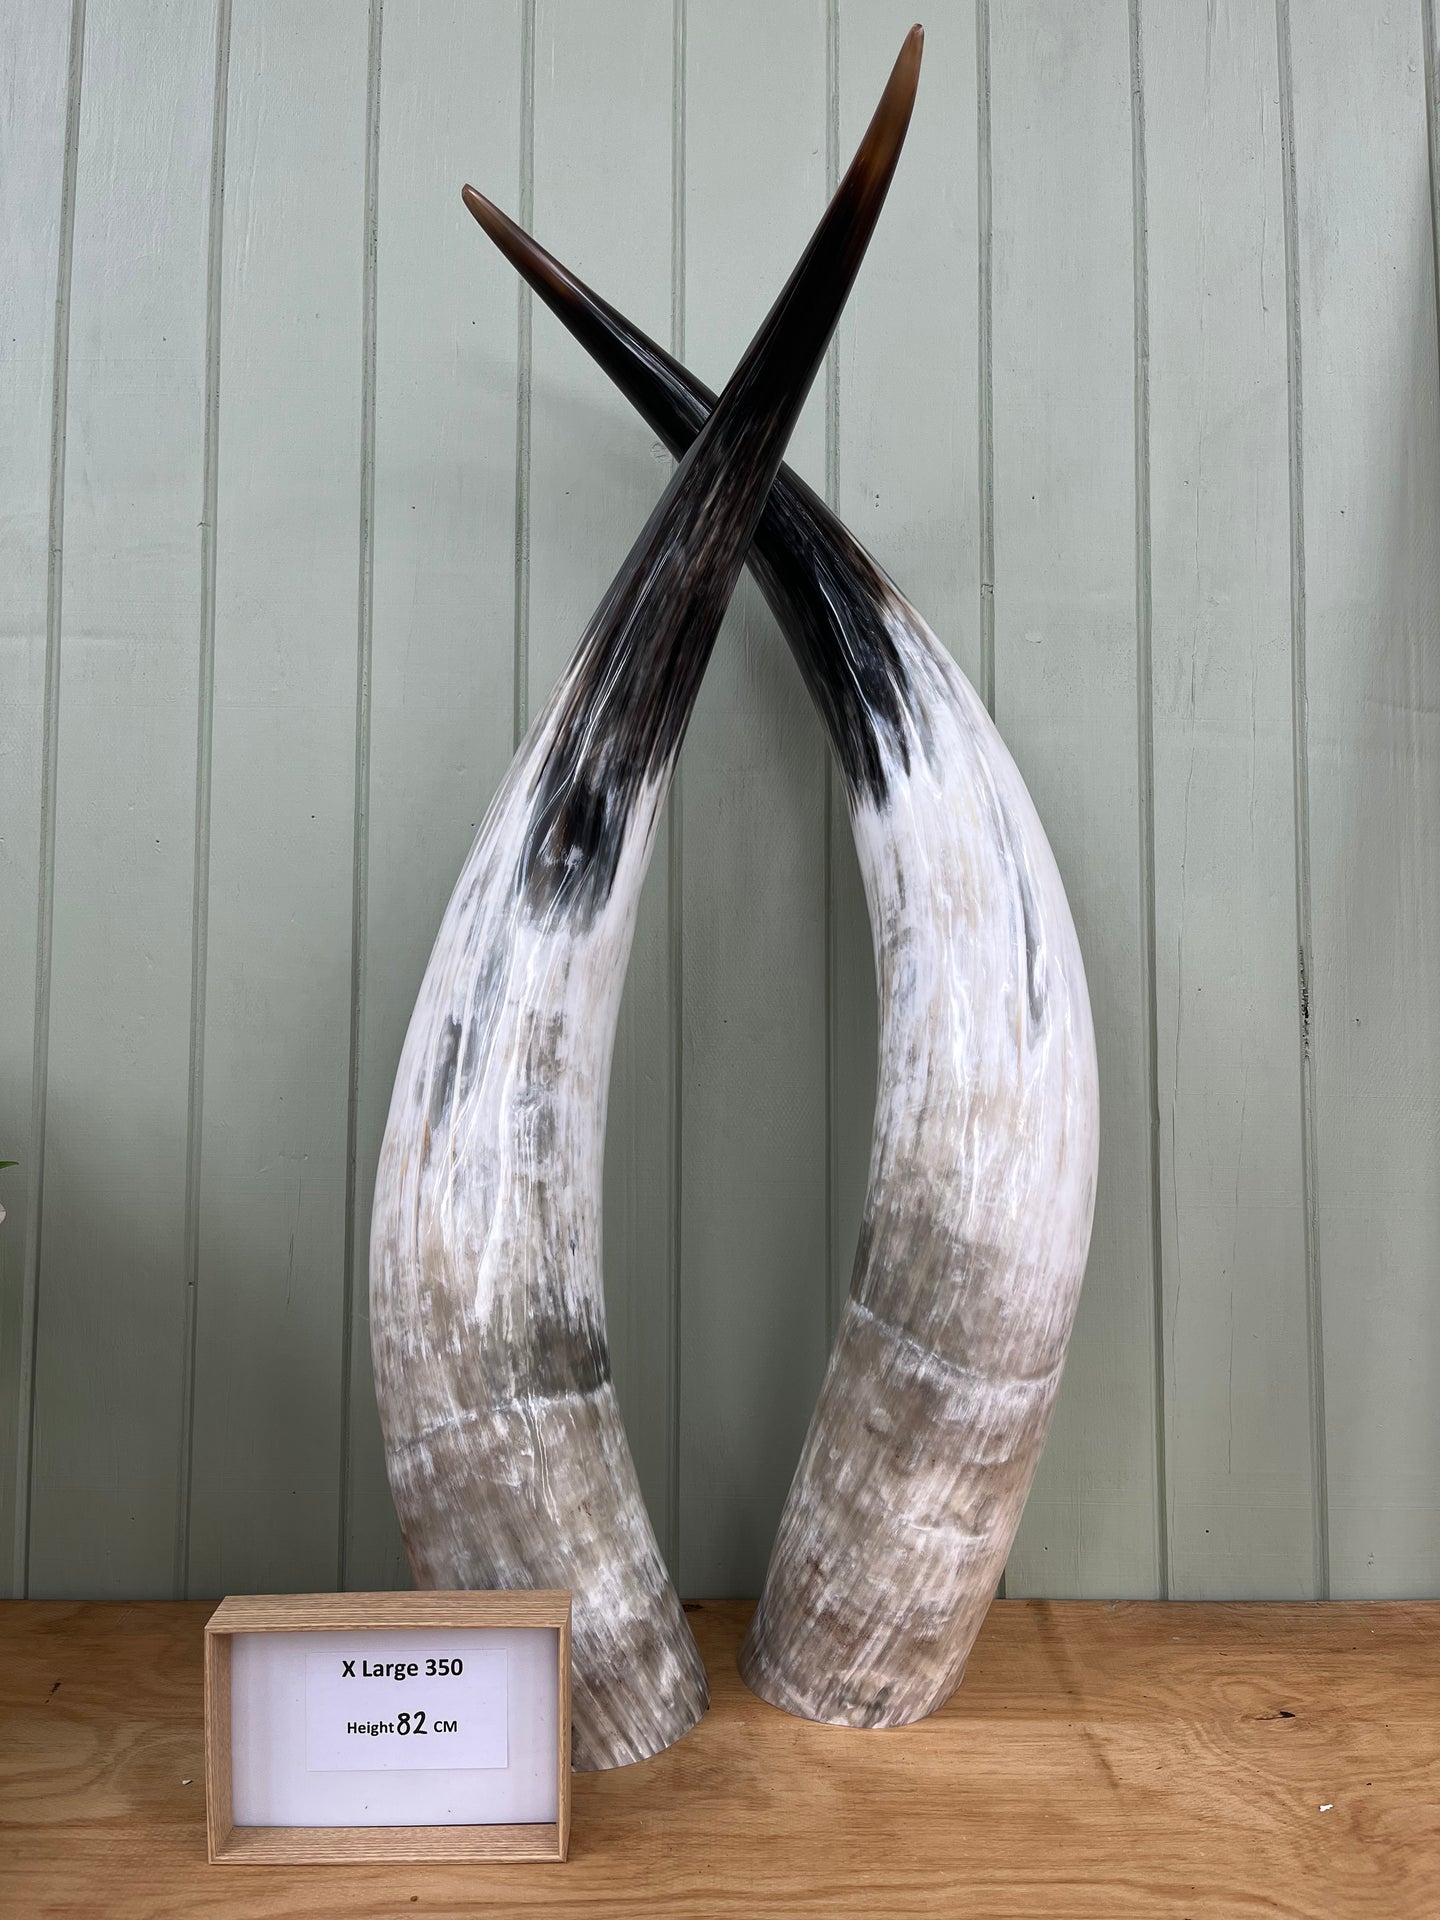 Ankole Cattle Horns - X Large 350